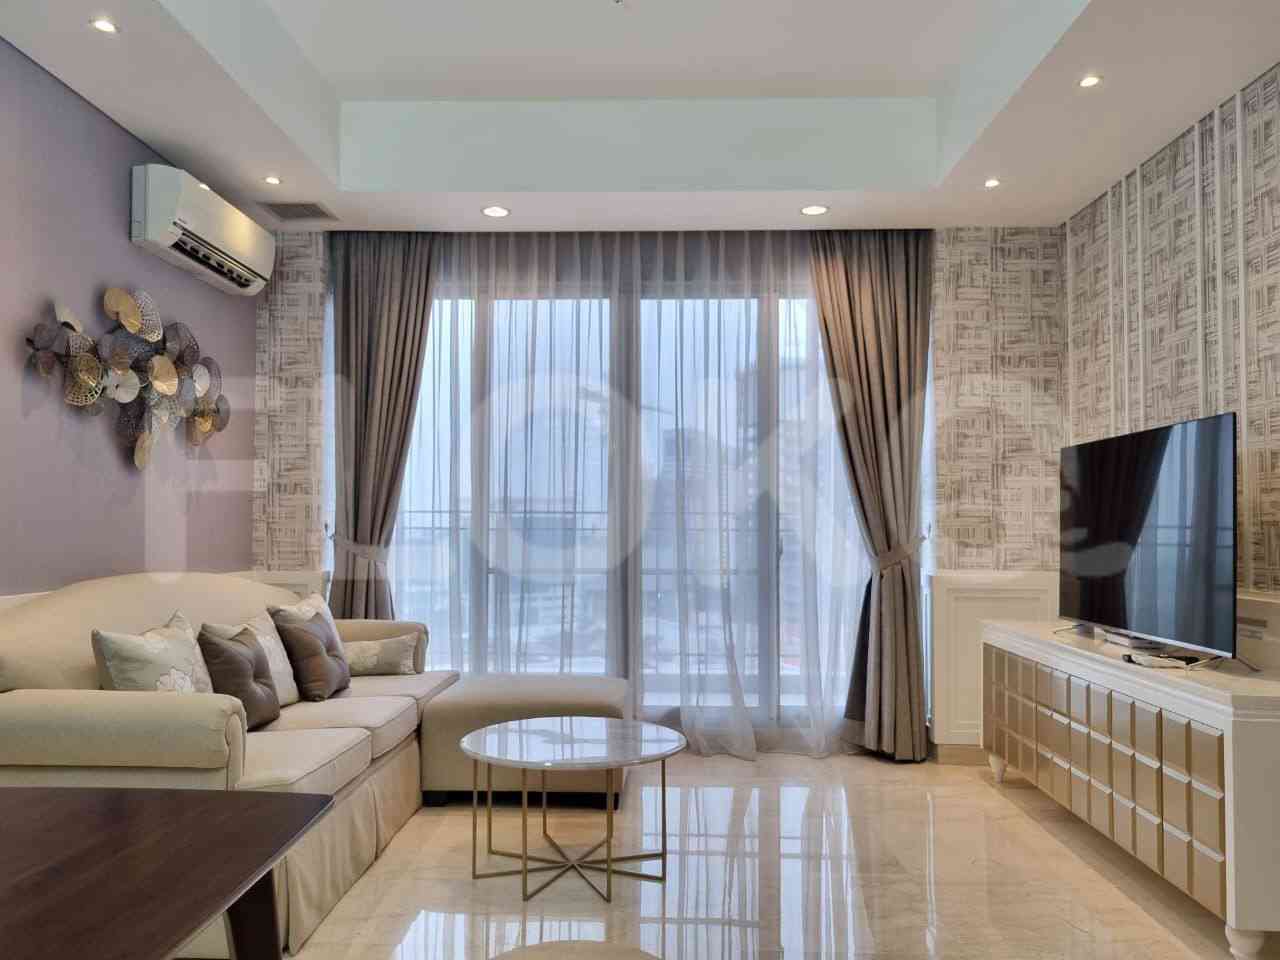 2 Bedroom on 16th Floor for Rent in Apartemen Branz Simatupang - ftb57f 1